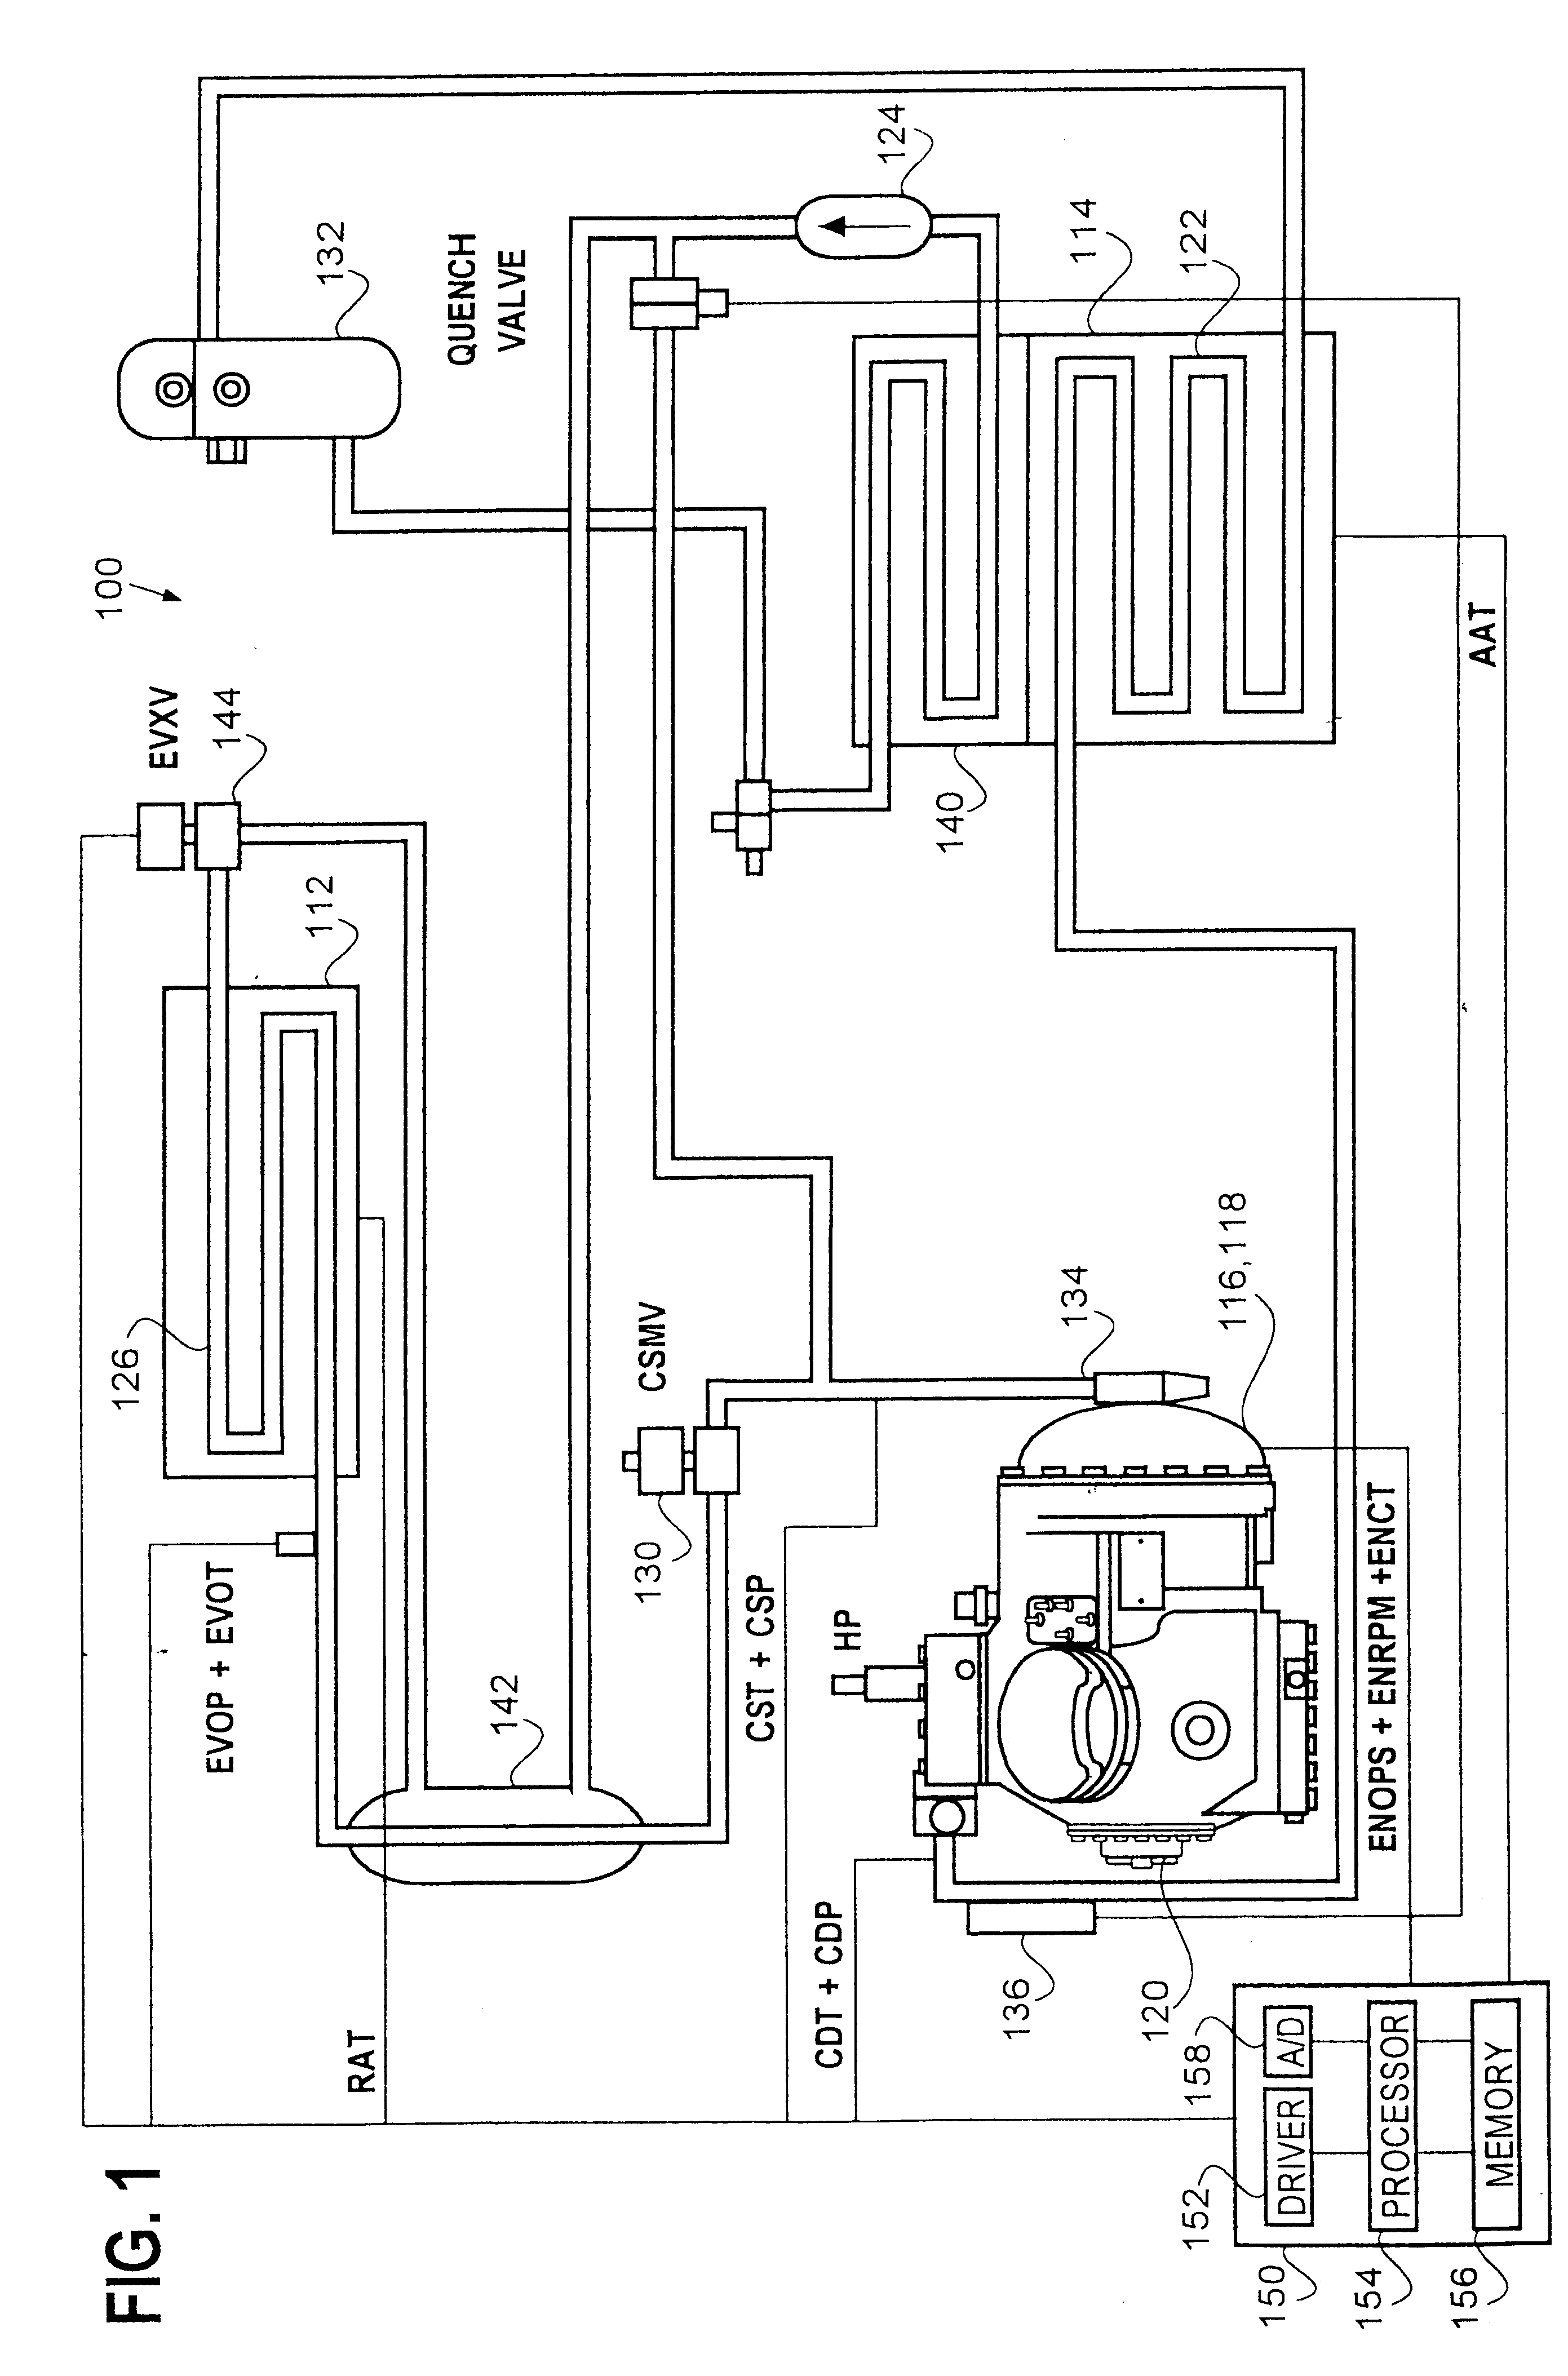 Generator power management